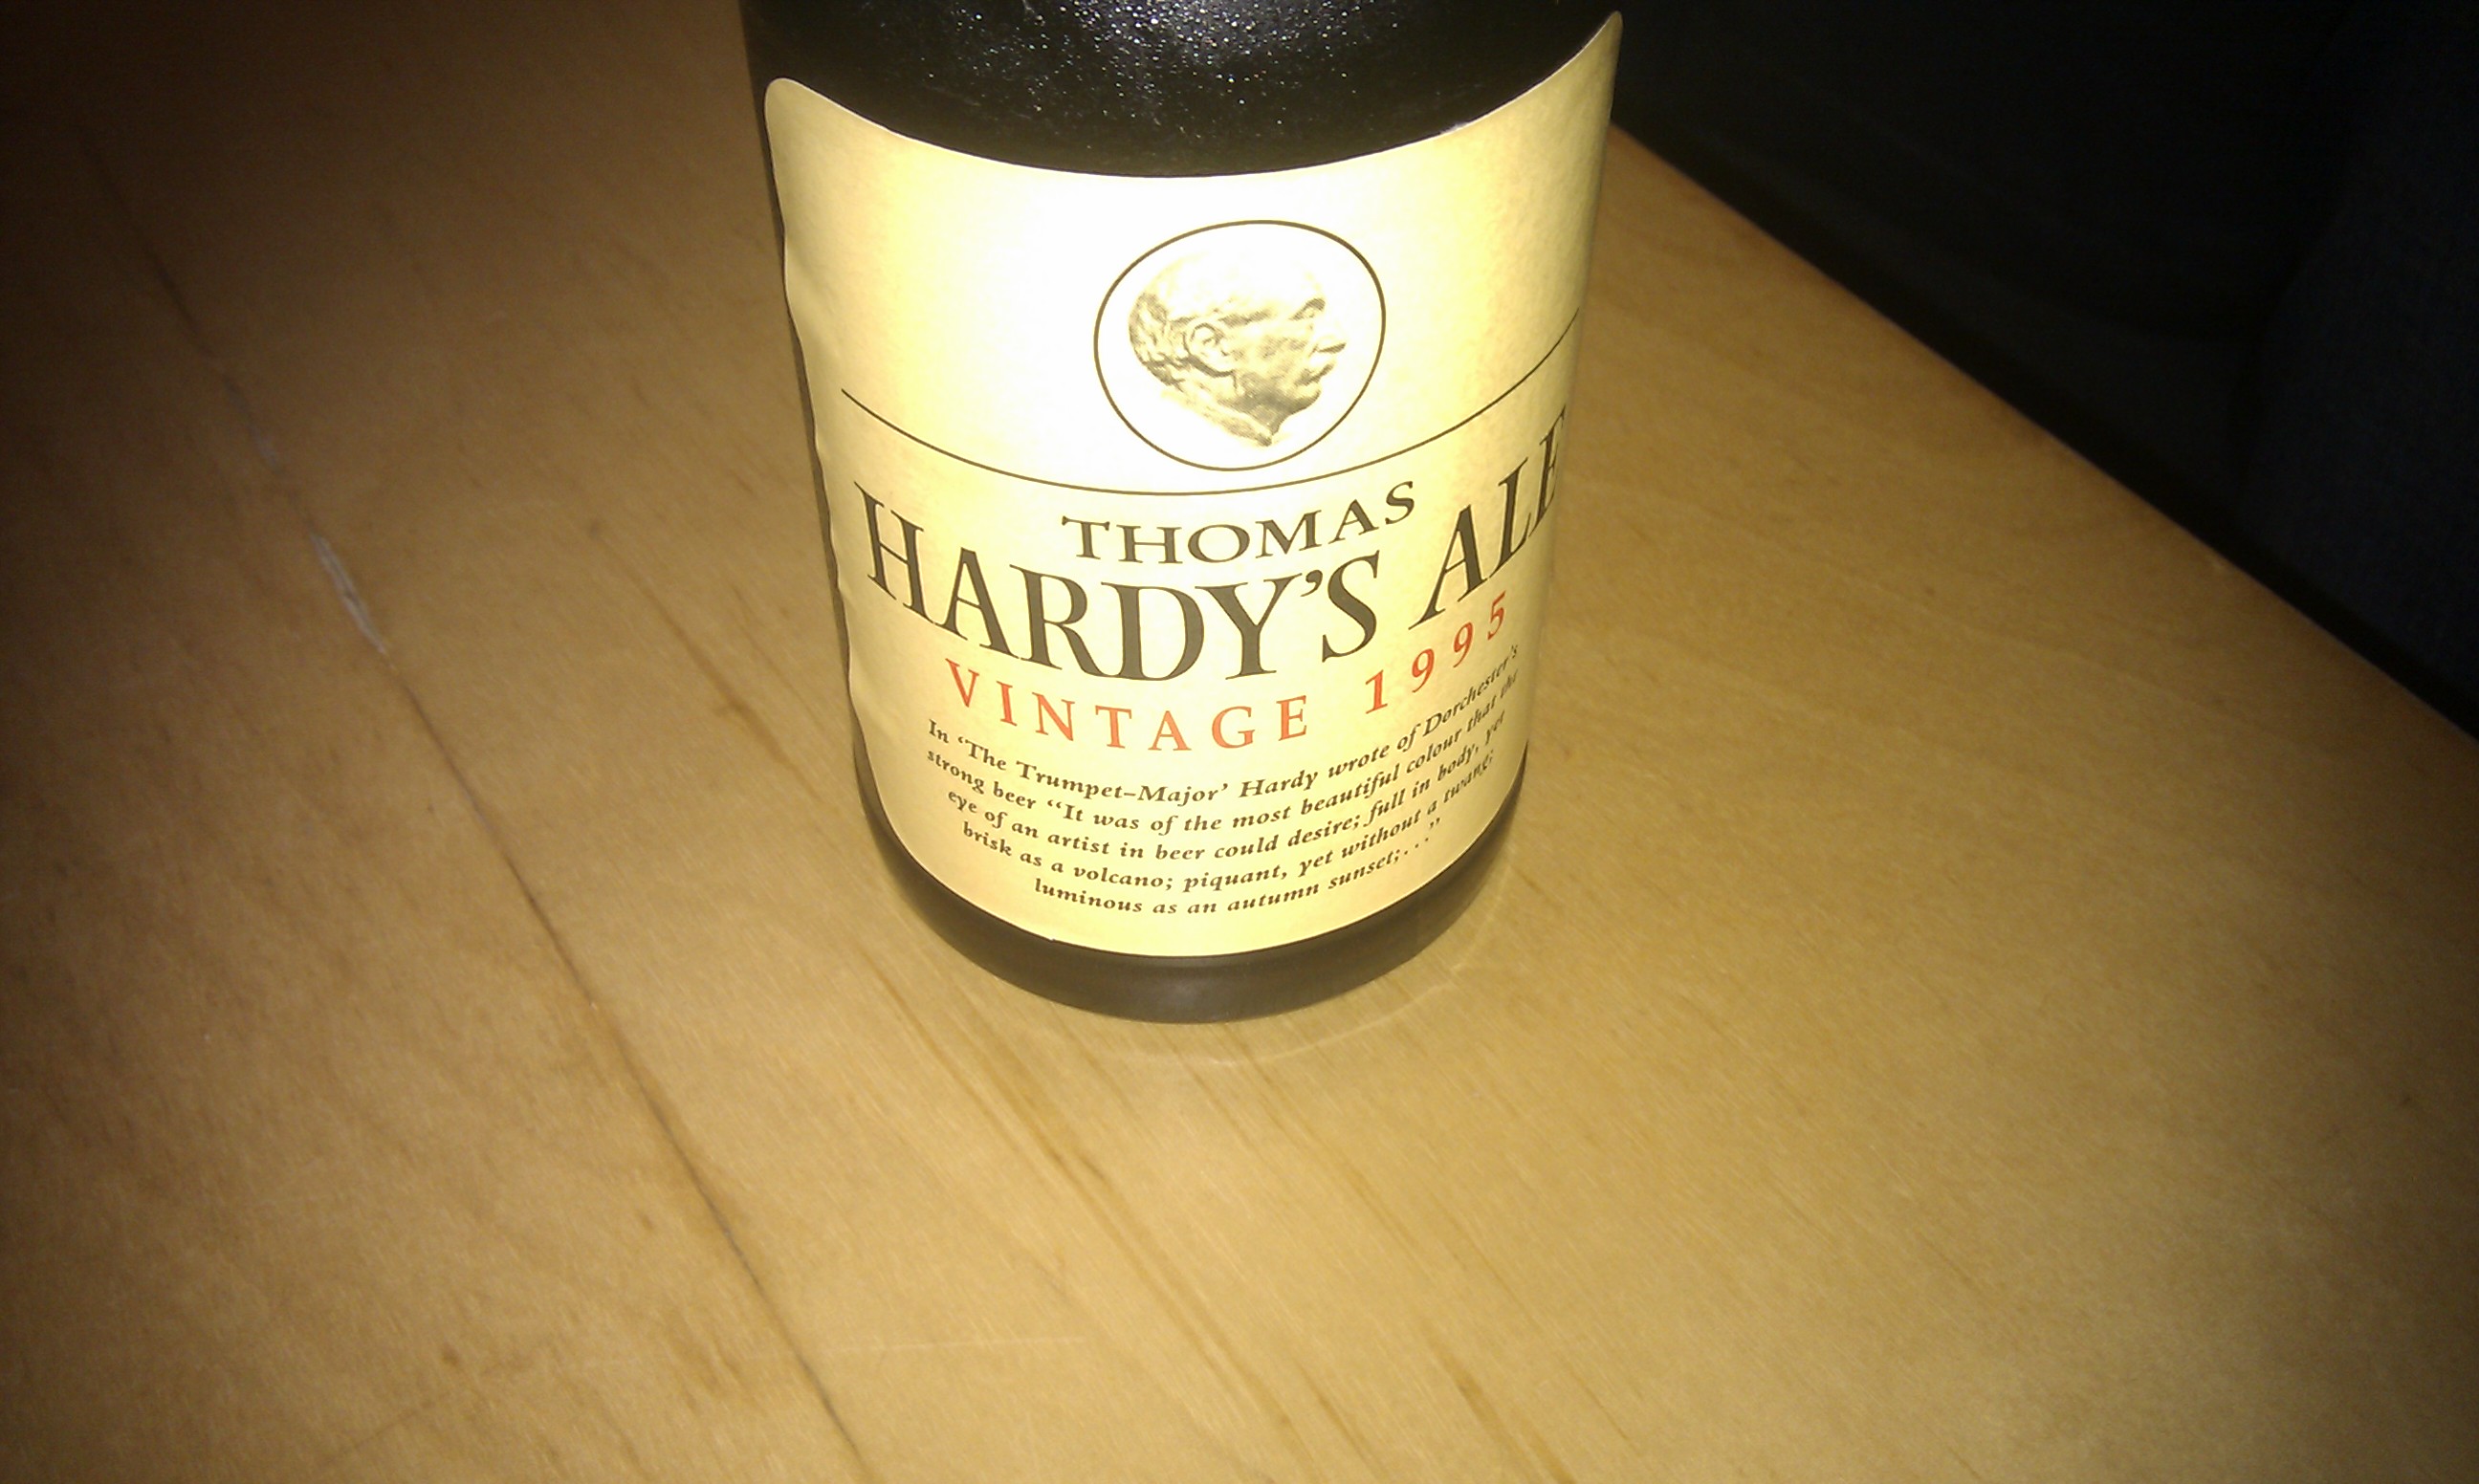 Hardy's 1995 vintage ale